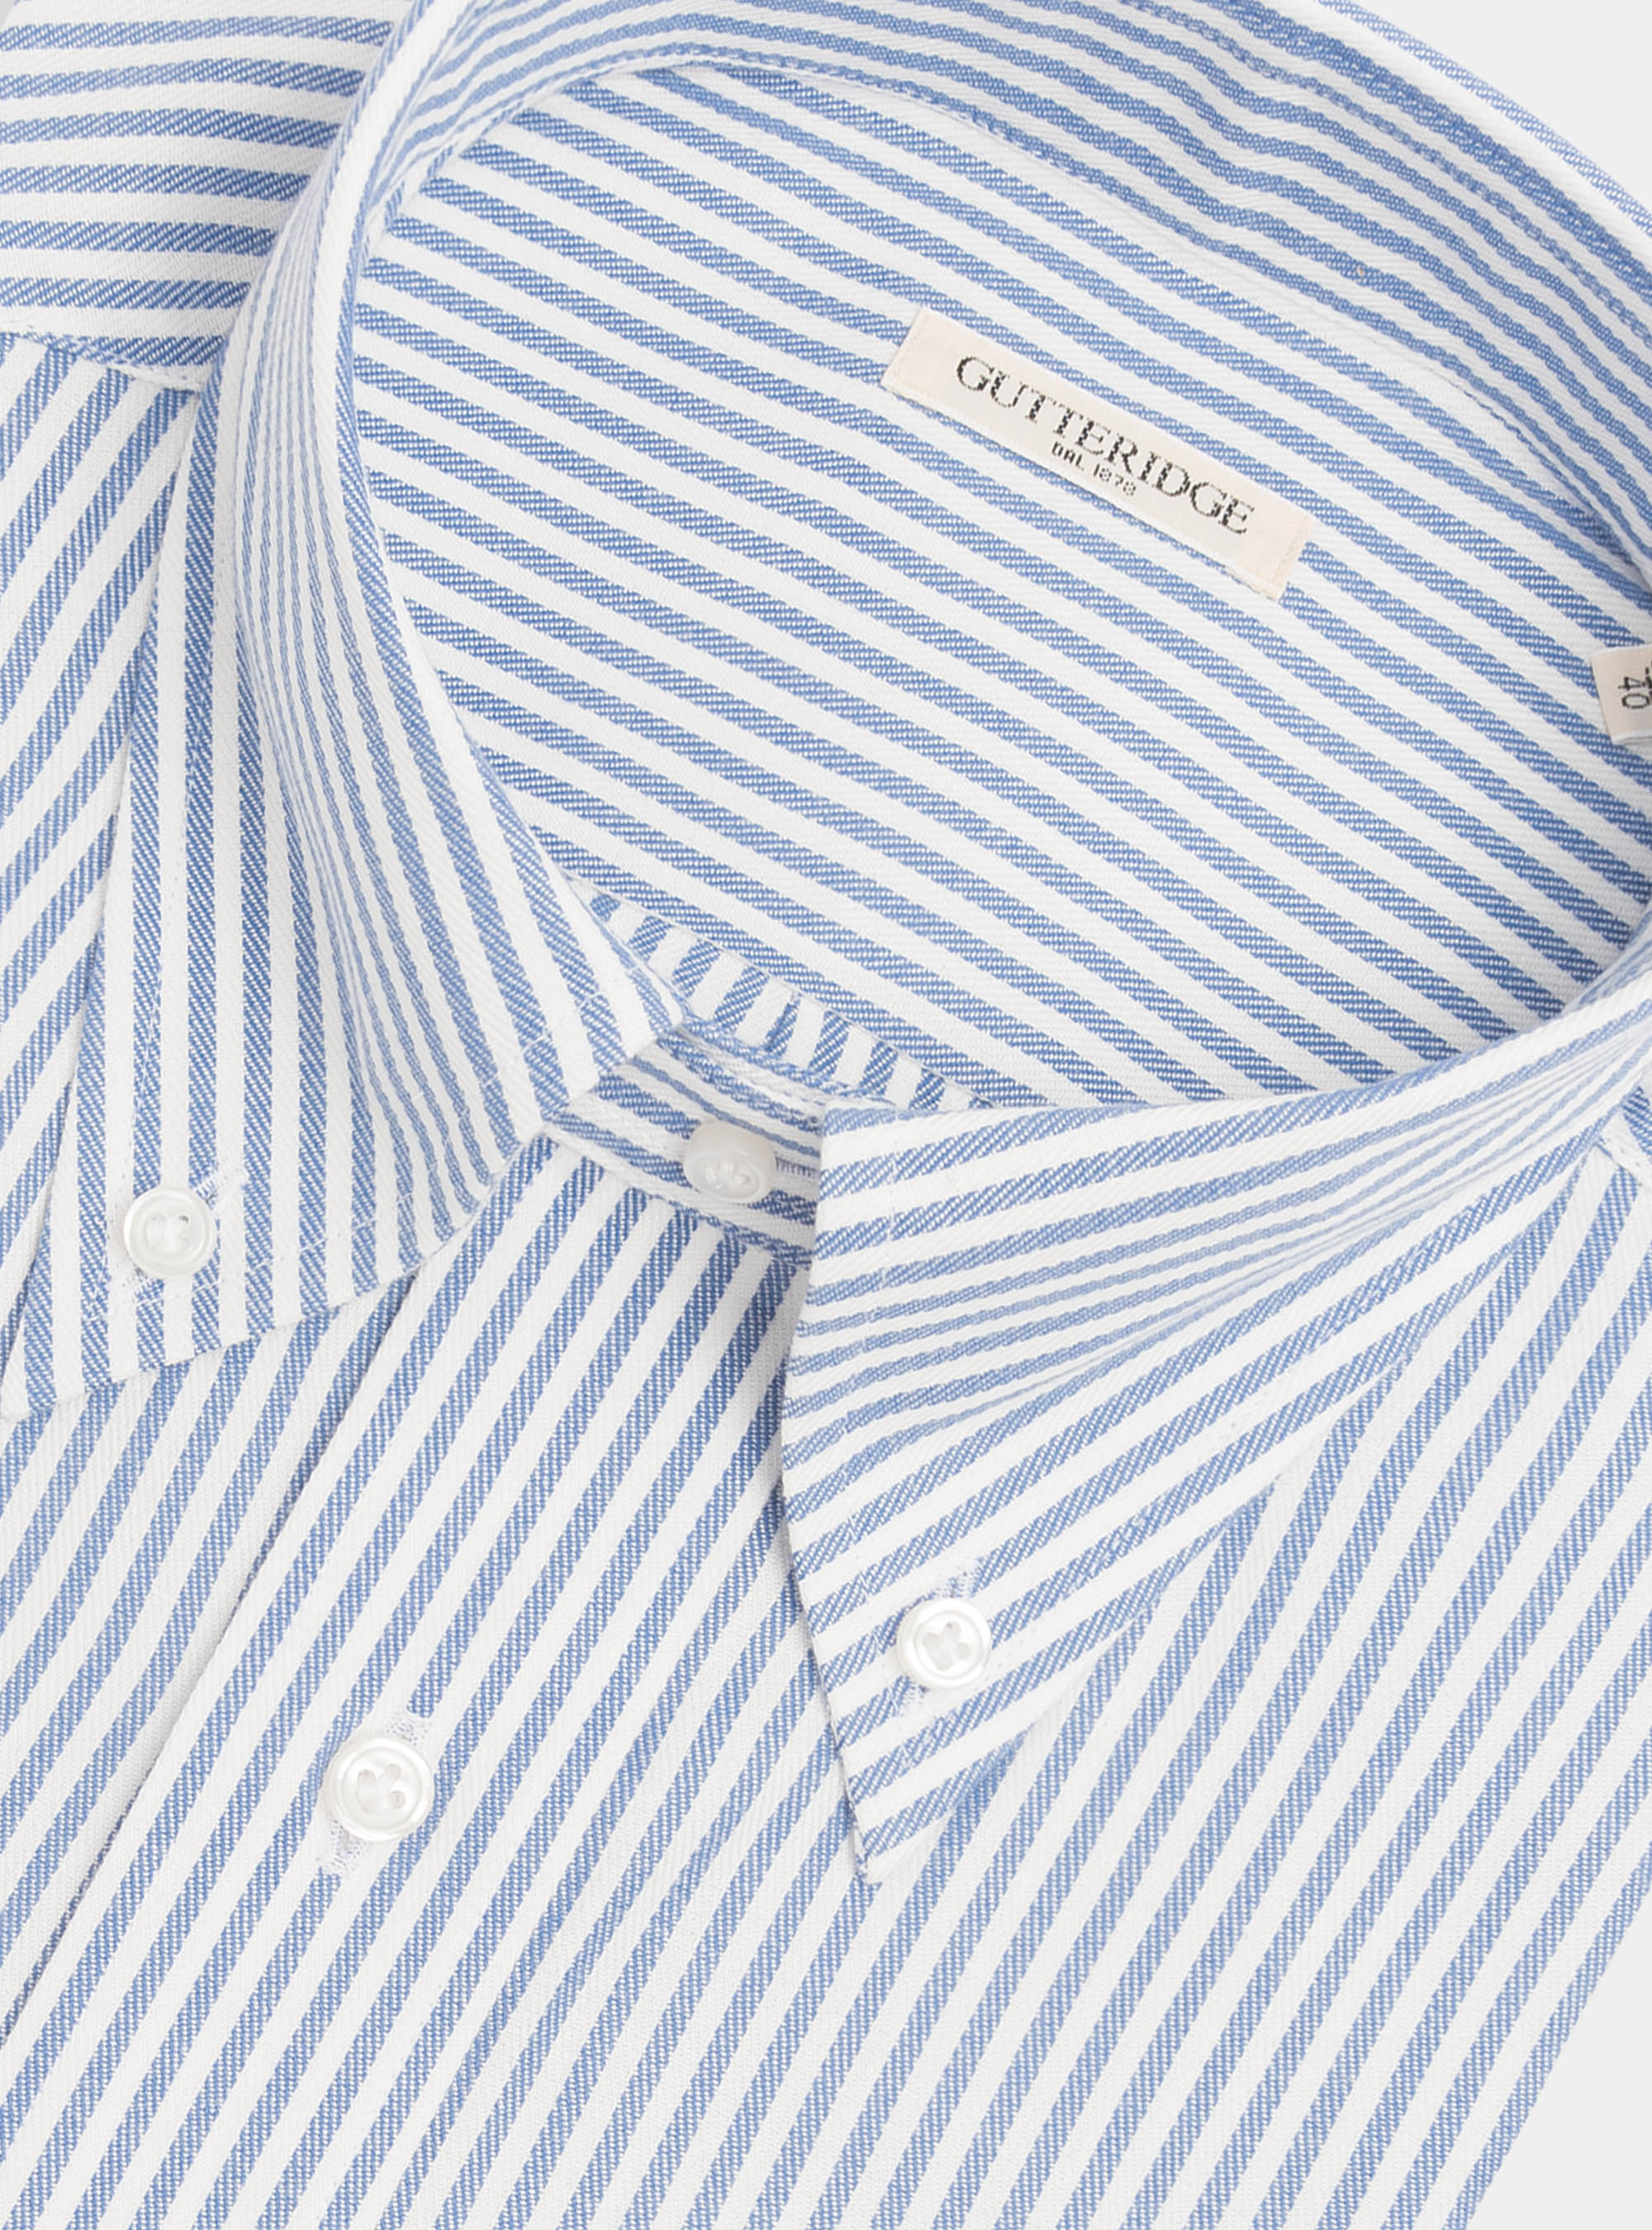 Cotton flannel button-down collar shirt | GutteridgeUS | Men's catalog ...